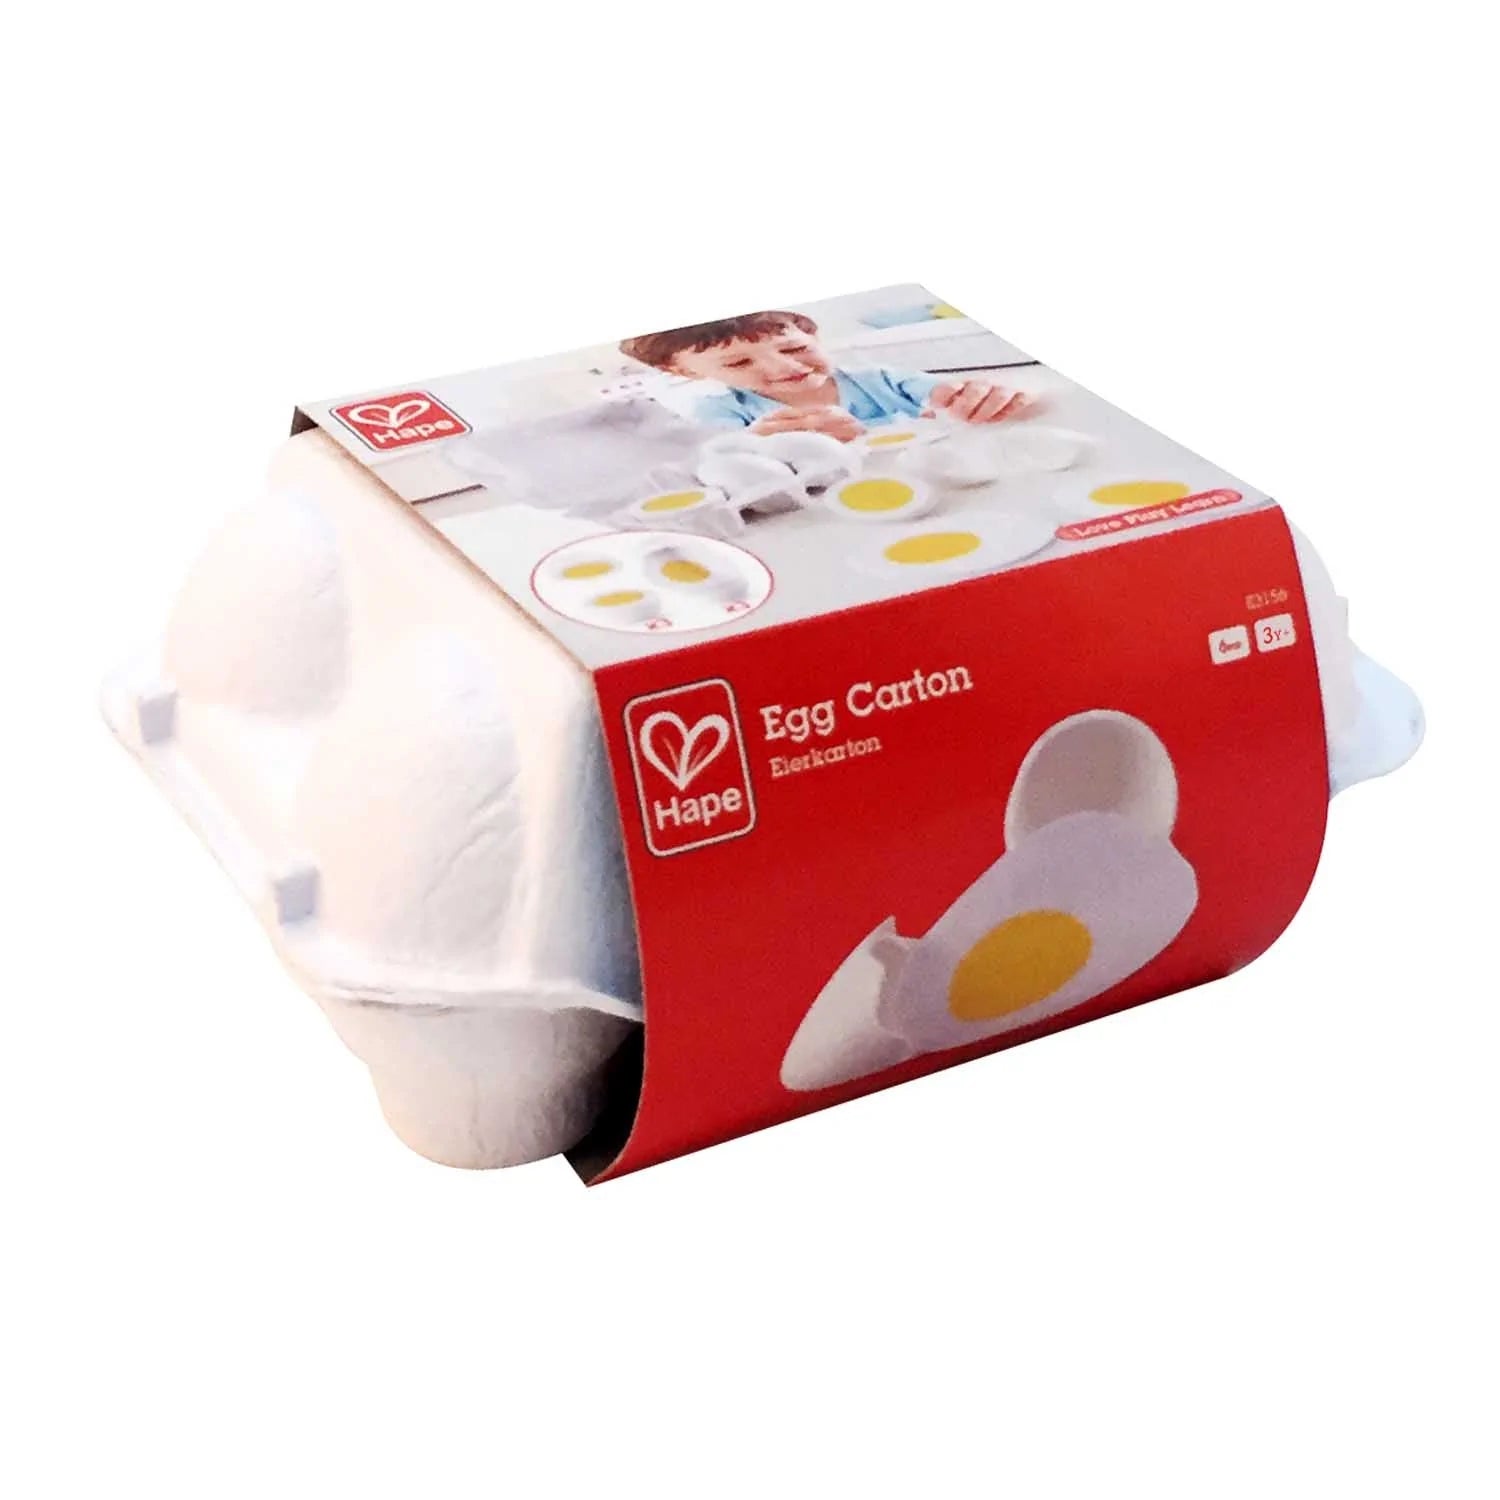 Hape Egg Carton Toy for kids